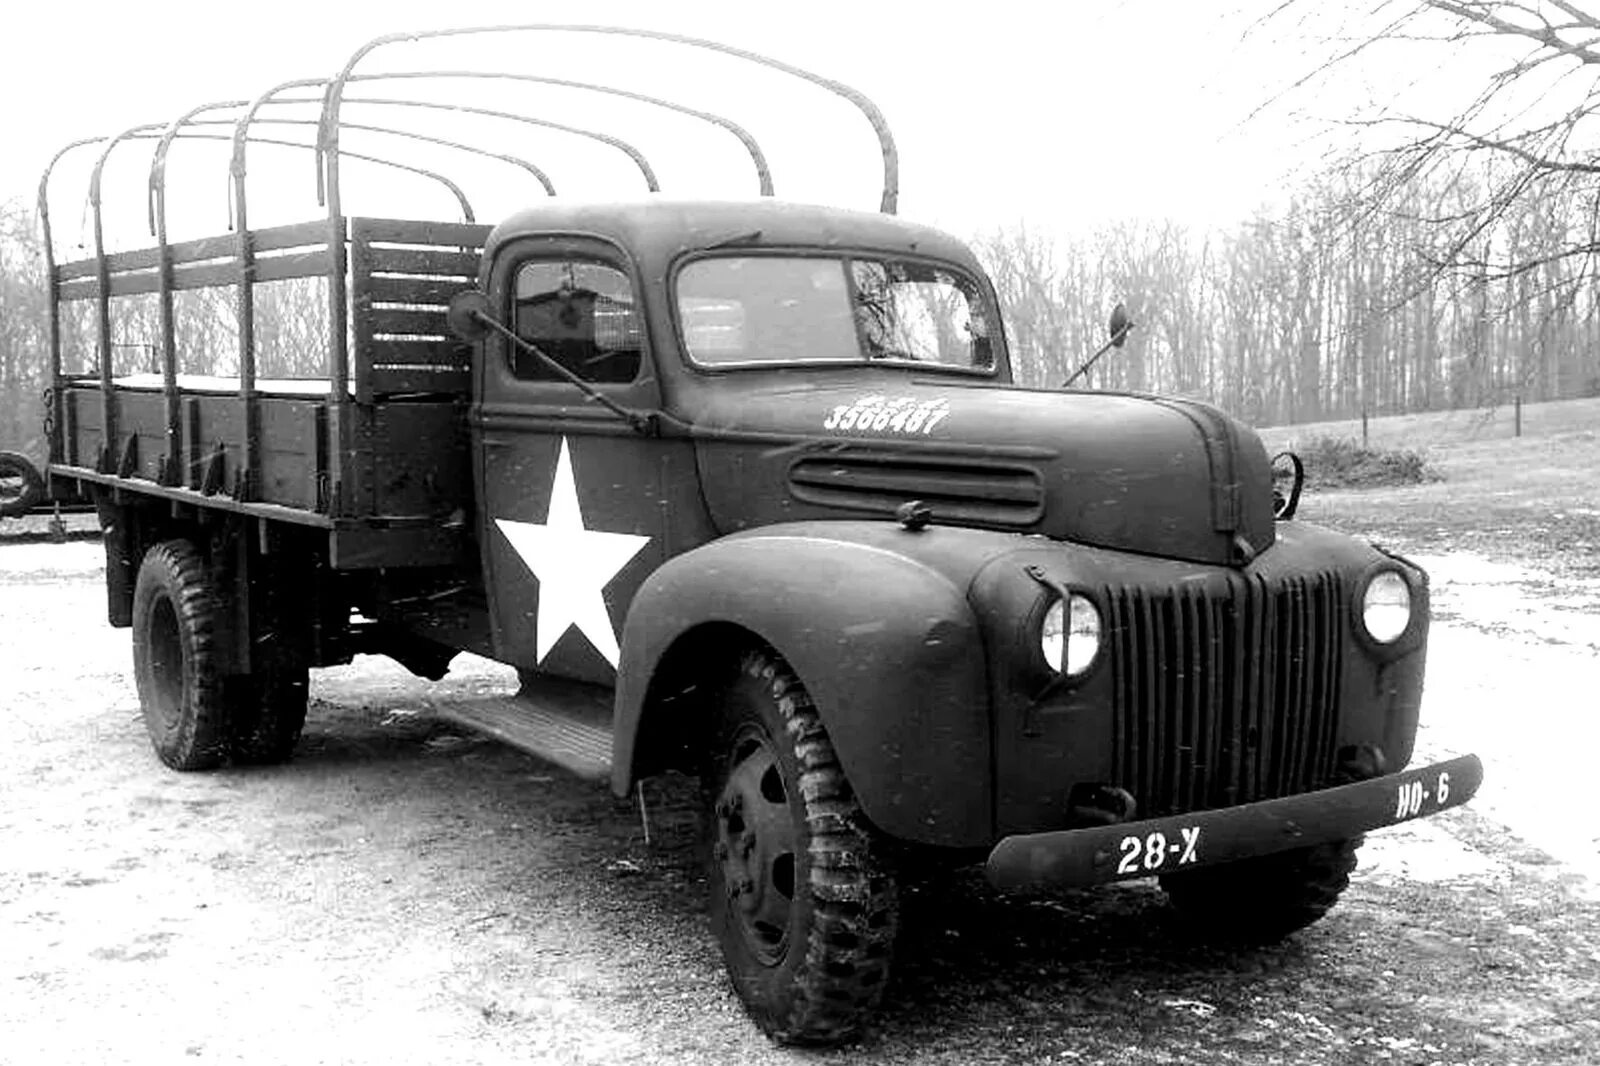 Грузовики 6 2. Ford g8t. Форд 6 ленд Лиз. Грузовик Форд g8t. Форд 2g8t, 1942 г.